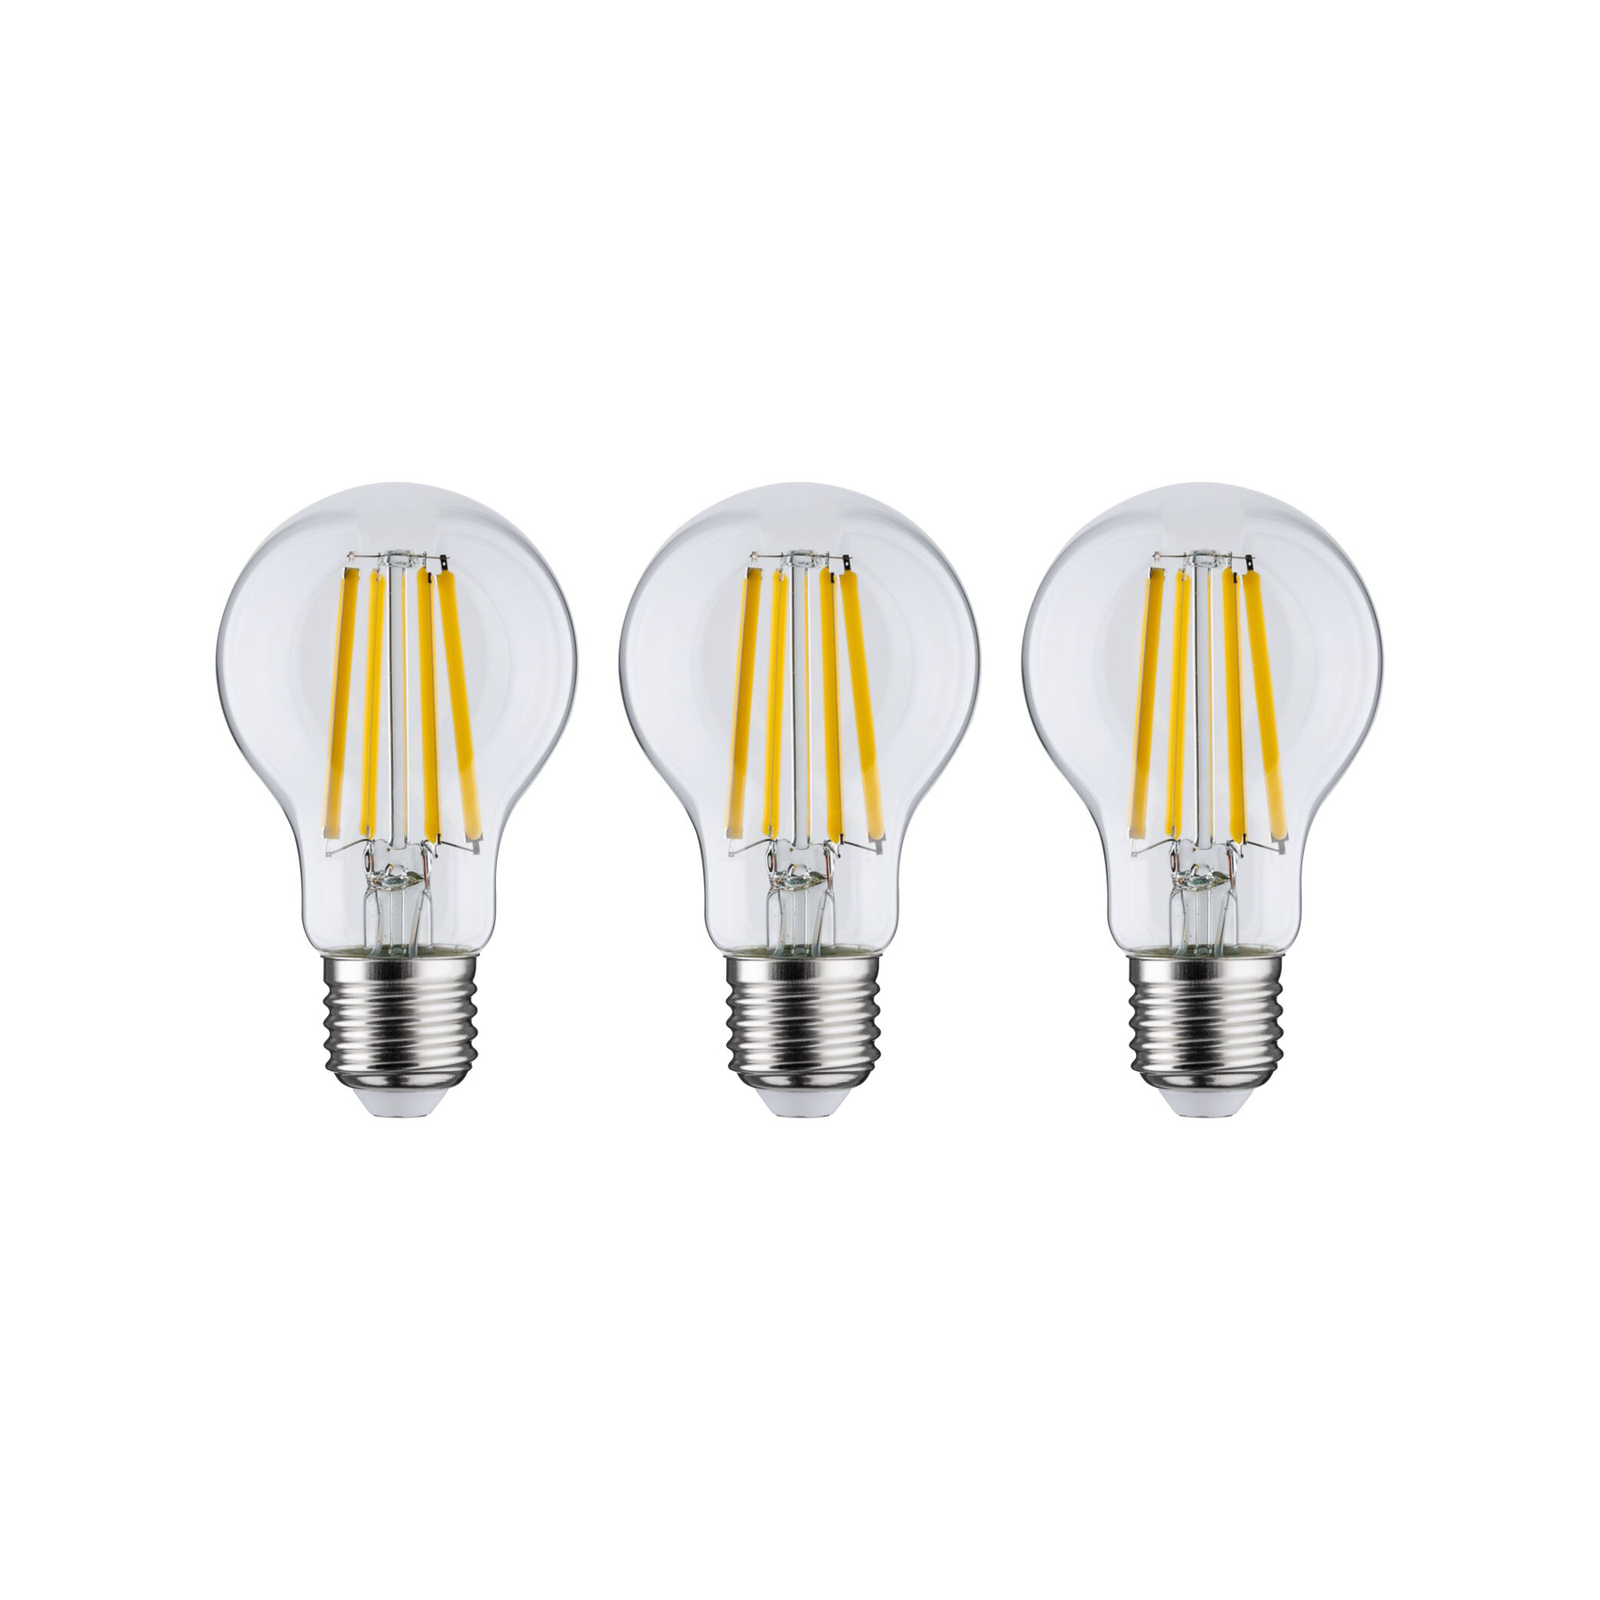 Paulmann Eco-Line LED bulb E27 4W 840lm 3000K 3x